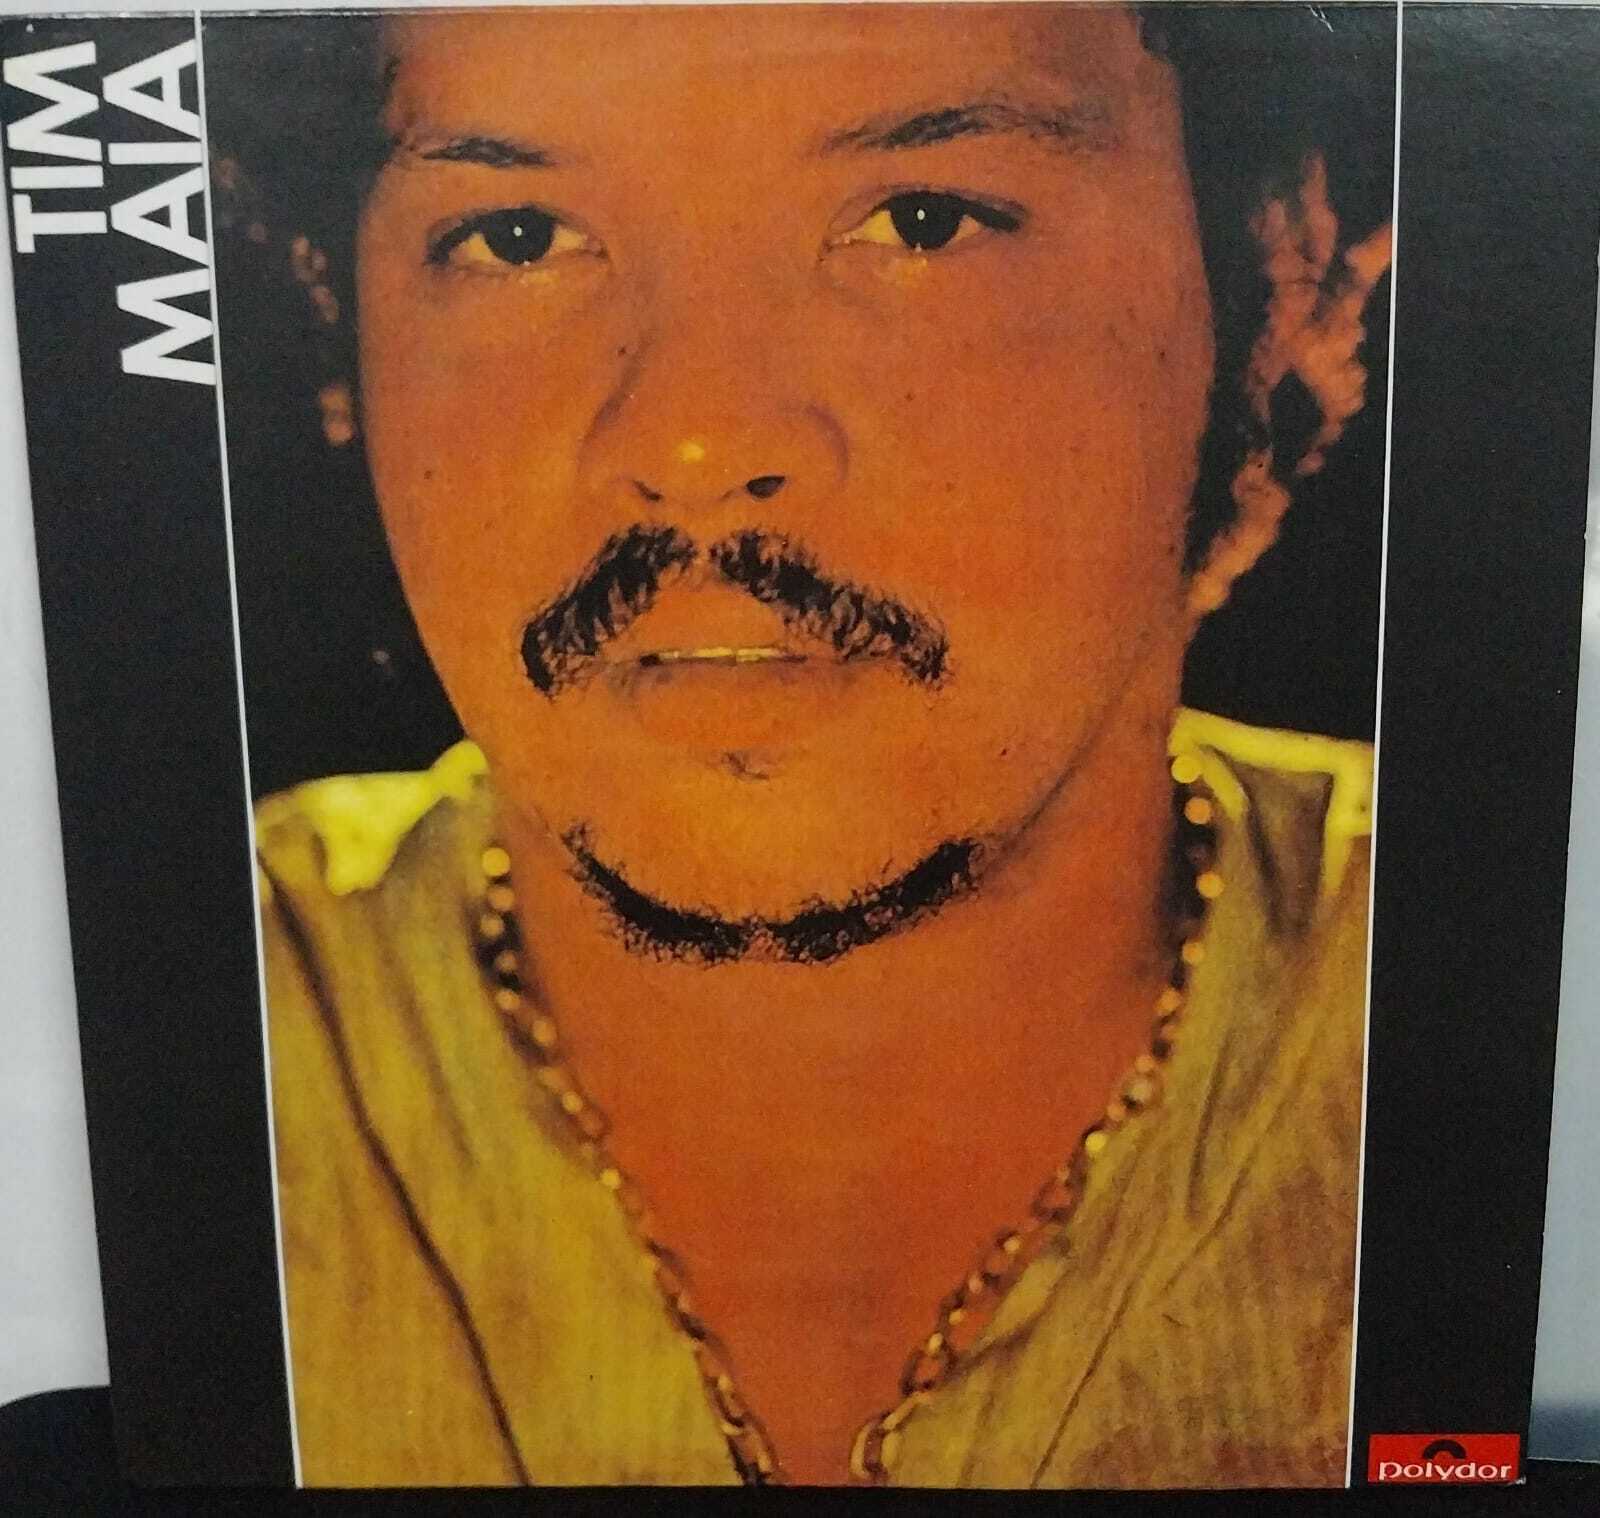 Vinil - Tim Maia - 1970